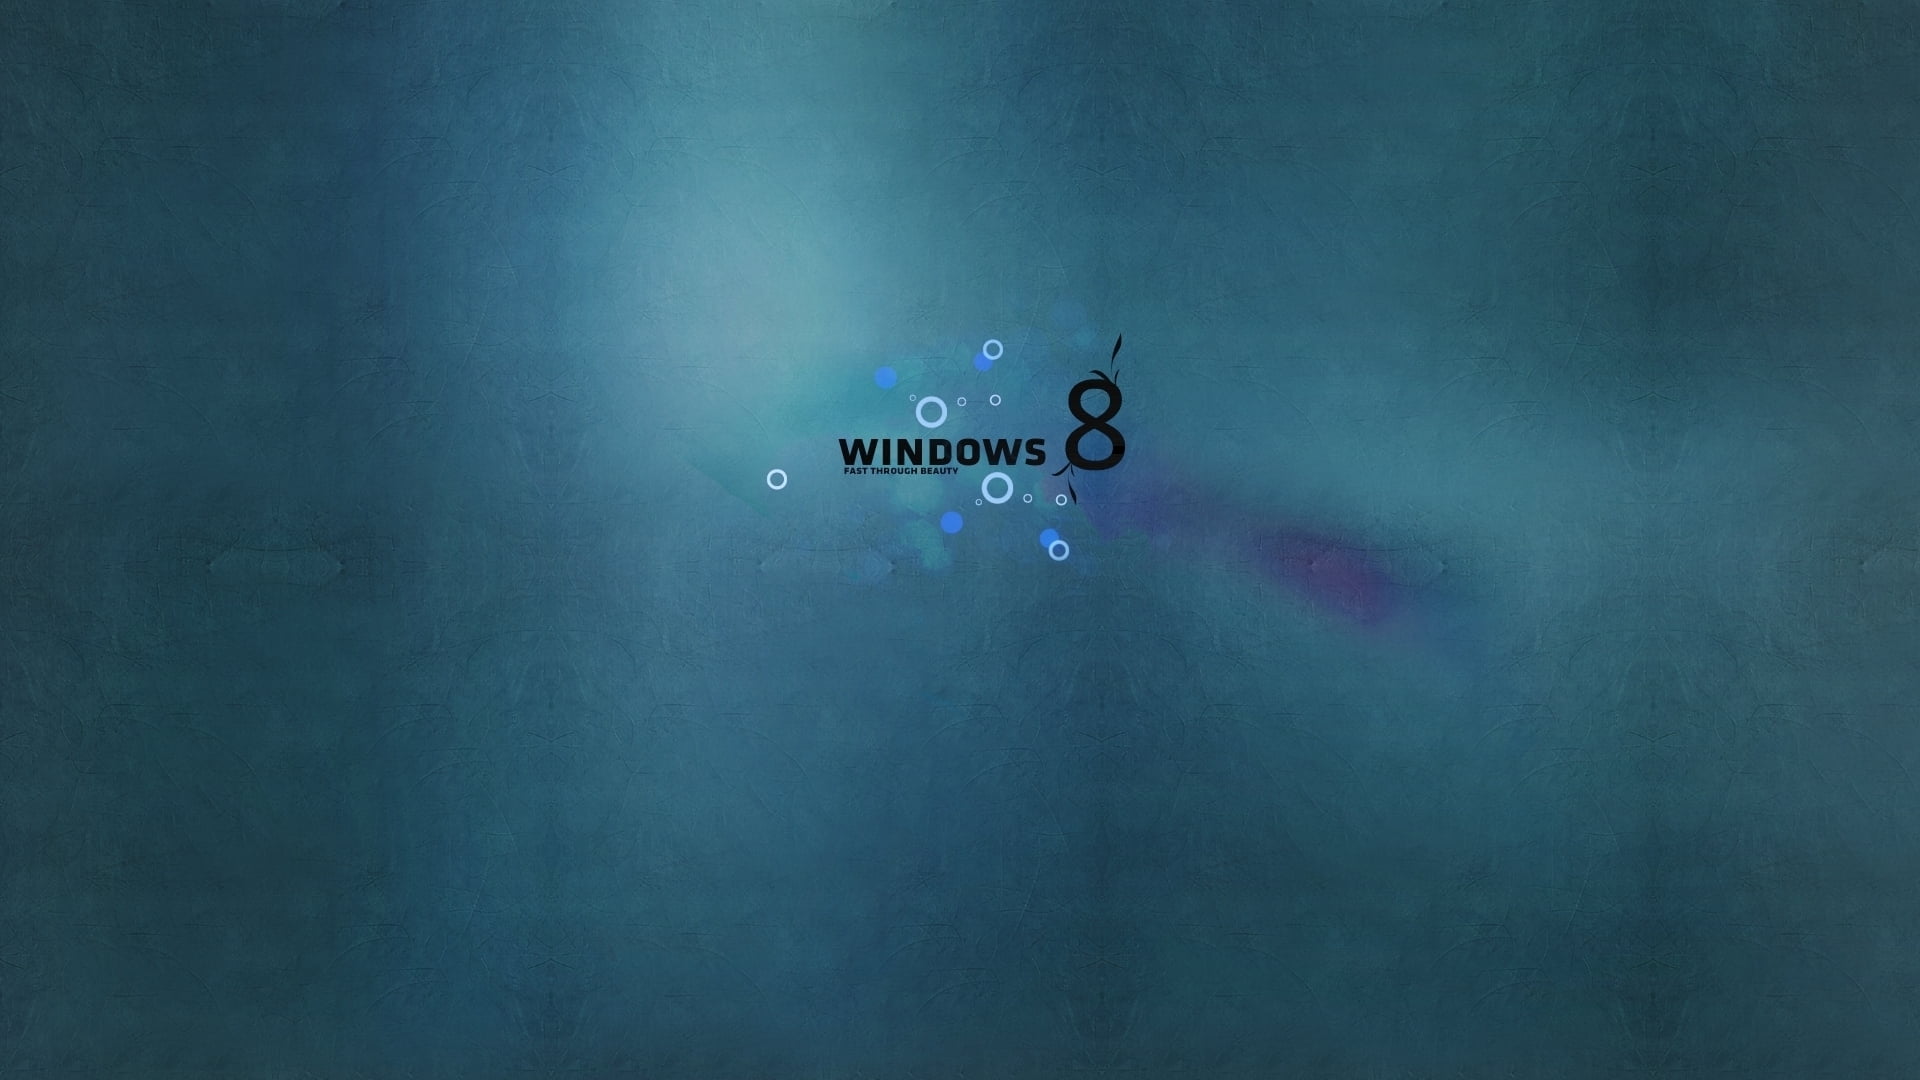 Windows 8 logo